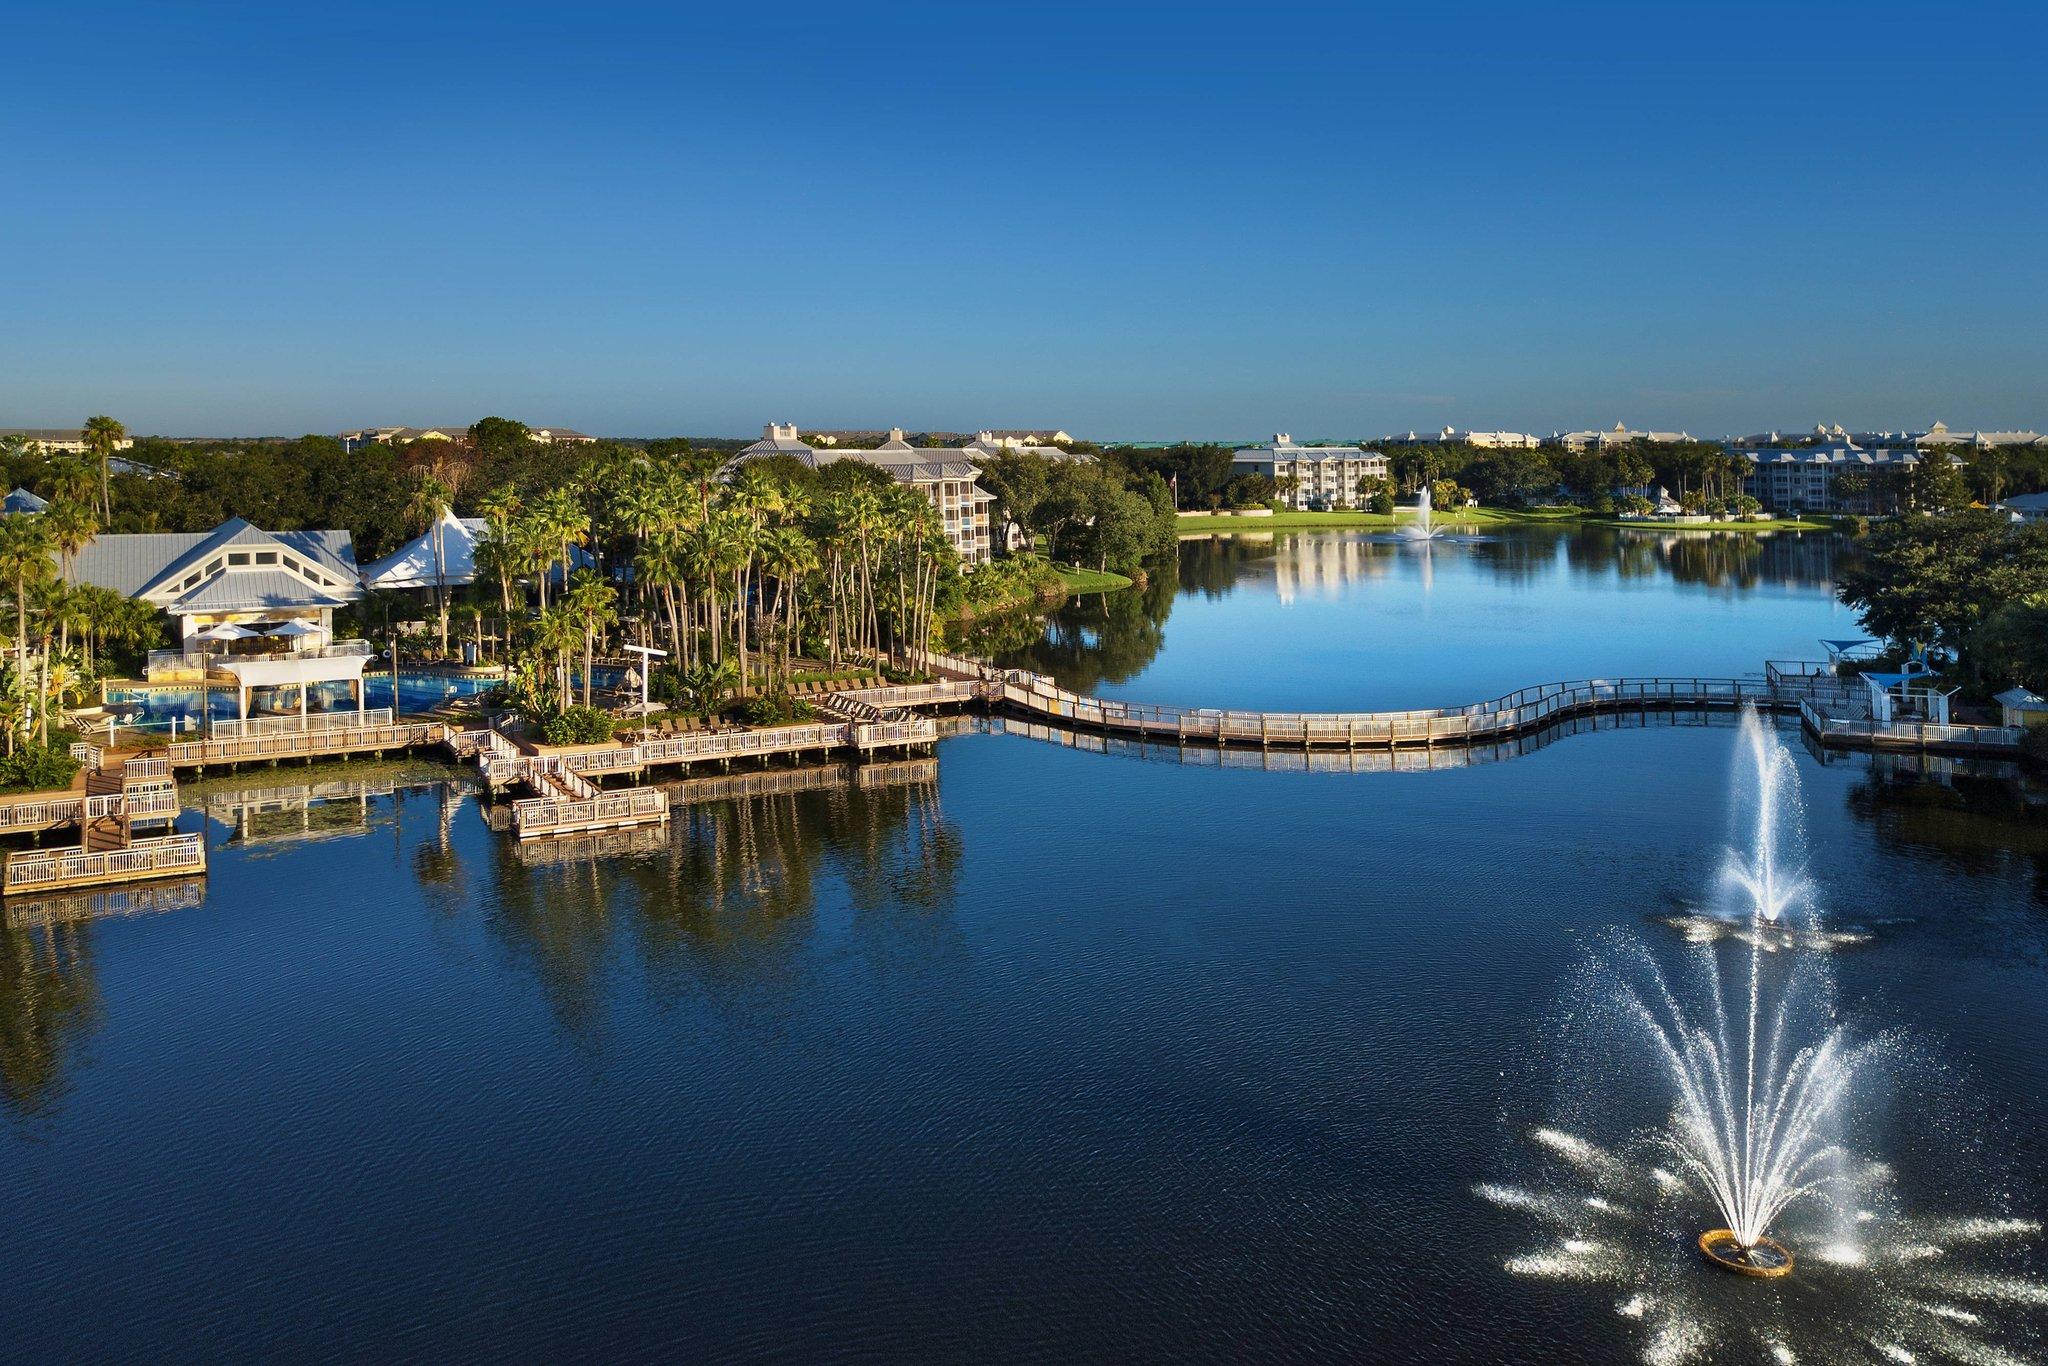 Marriott's Cypress Harbour in Orlando, FL